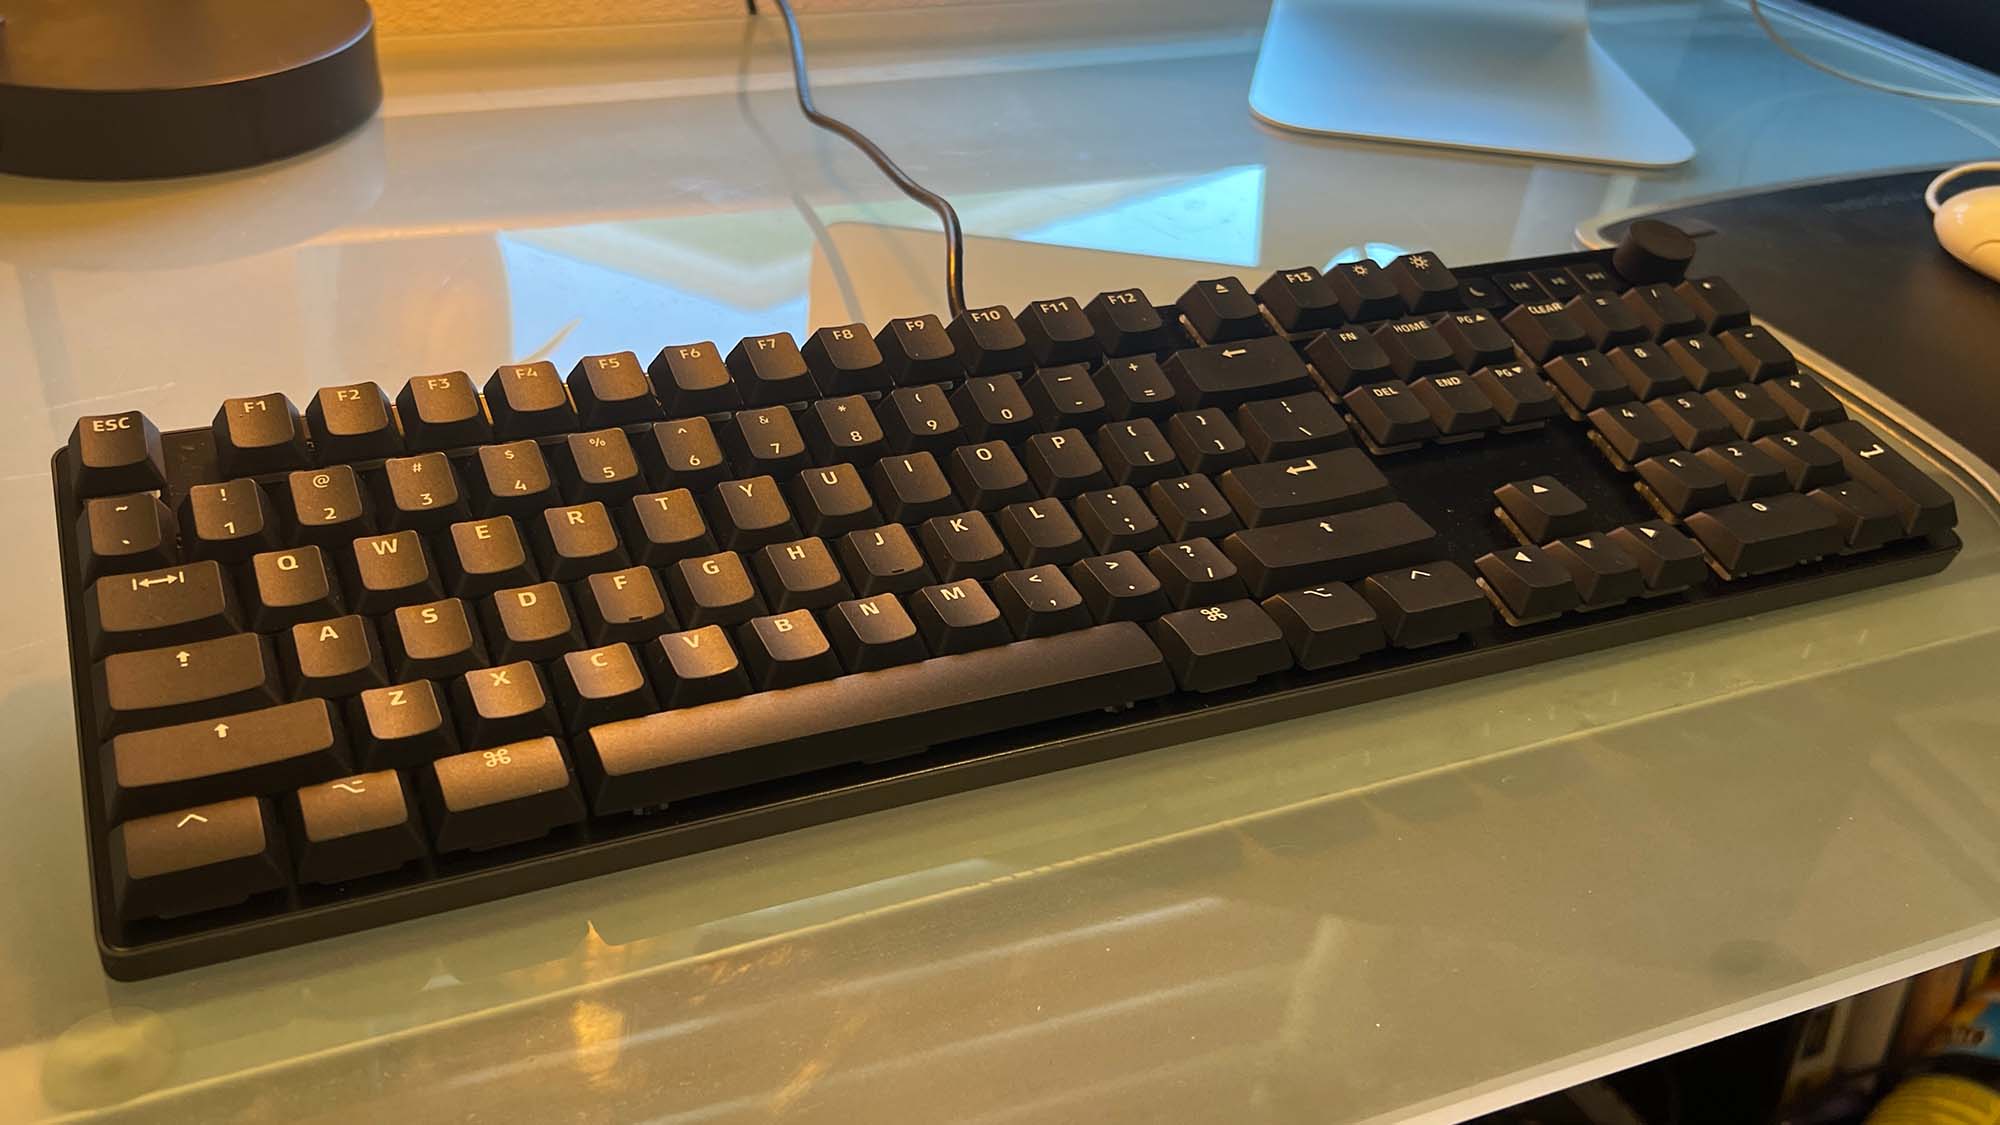 MacTigr Das keyboard on a glass desktop